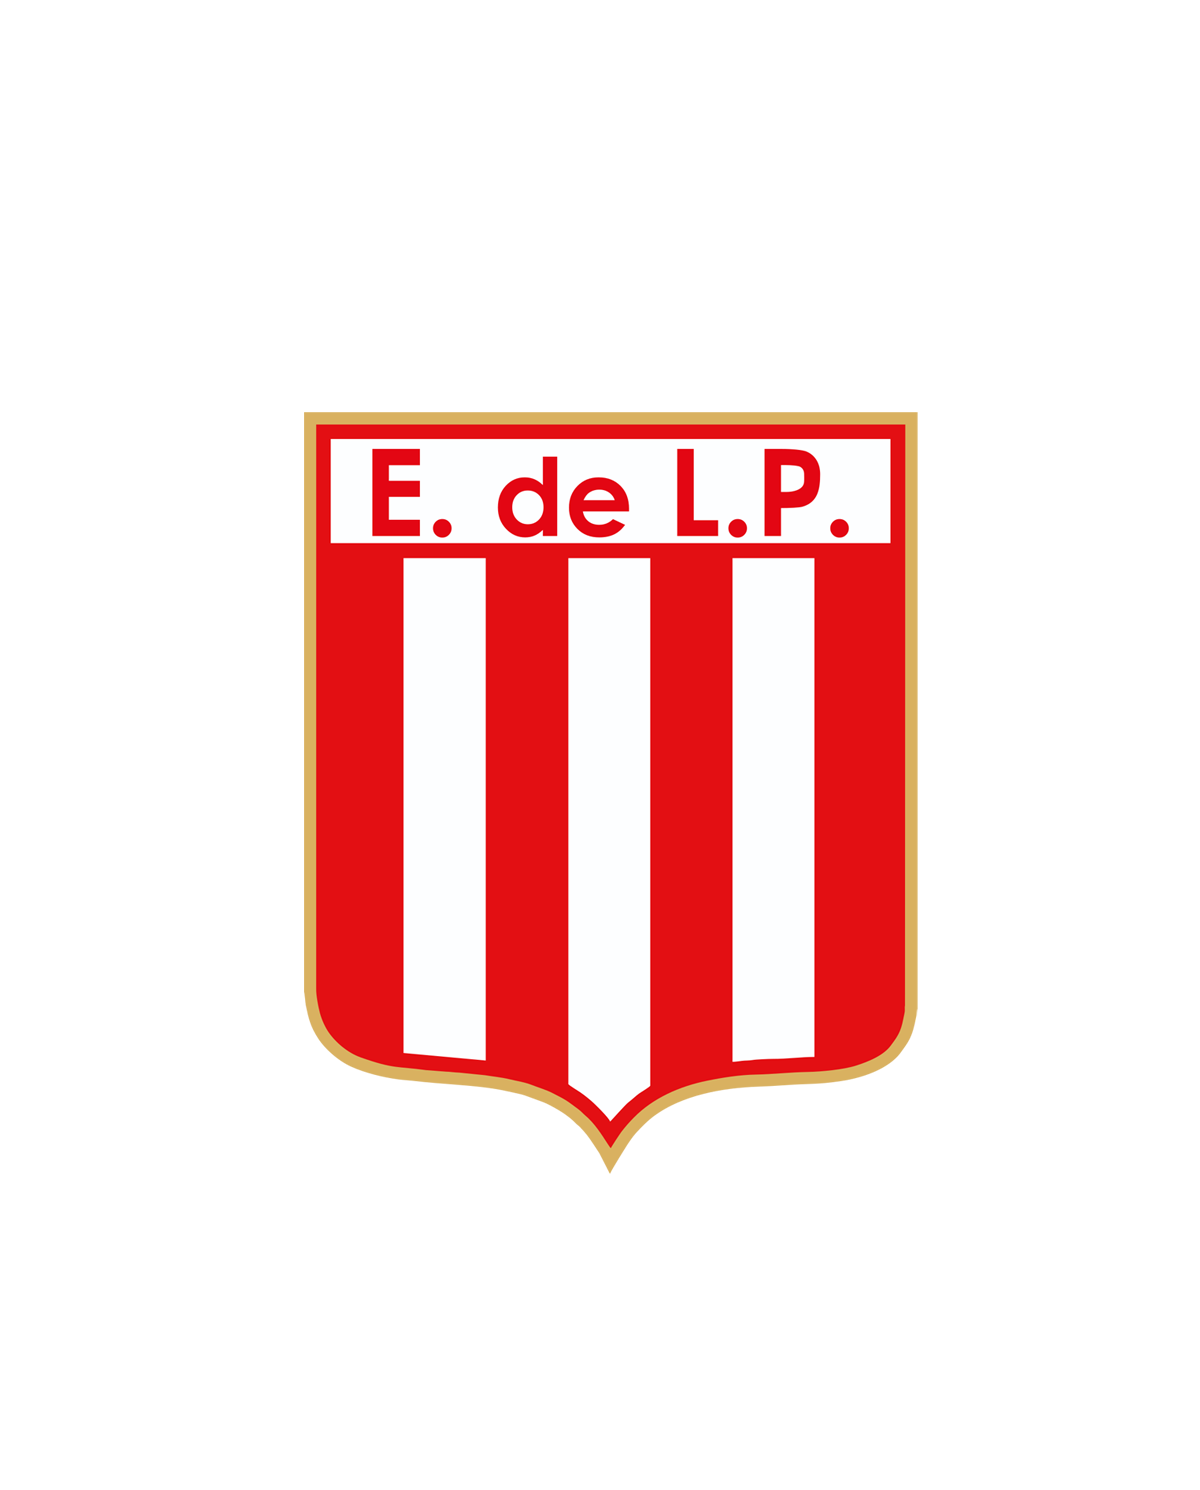 Club Estudiantes